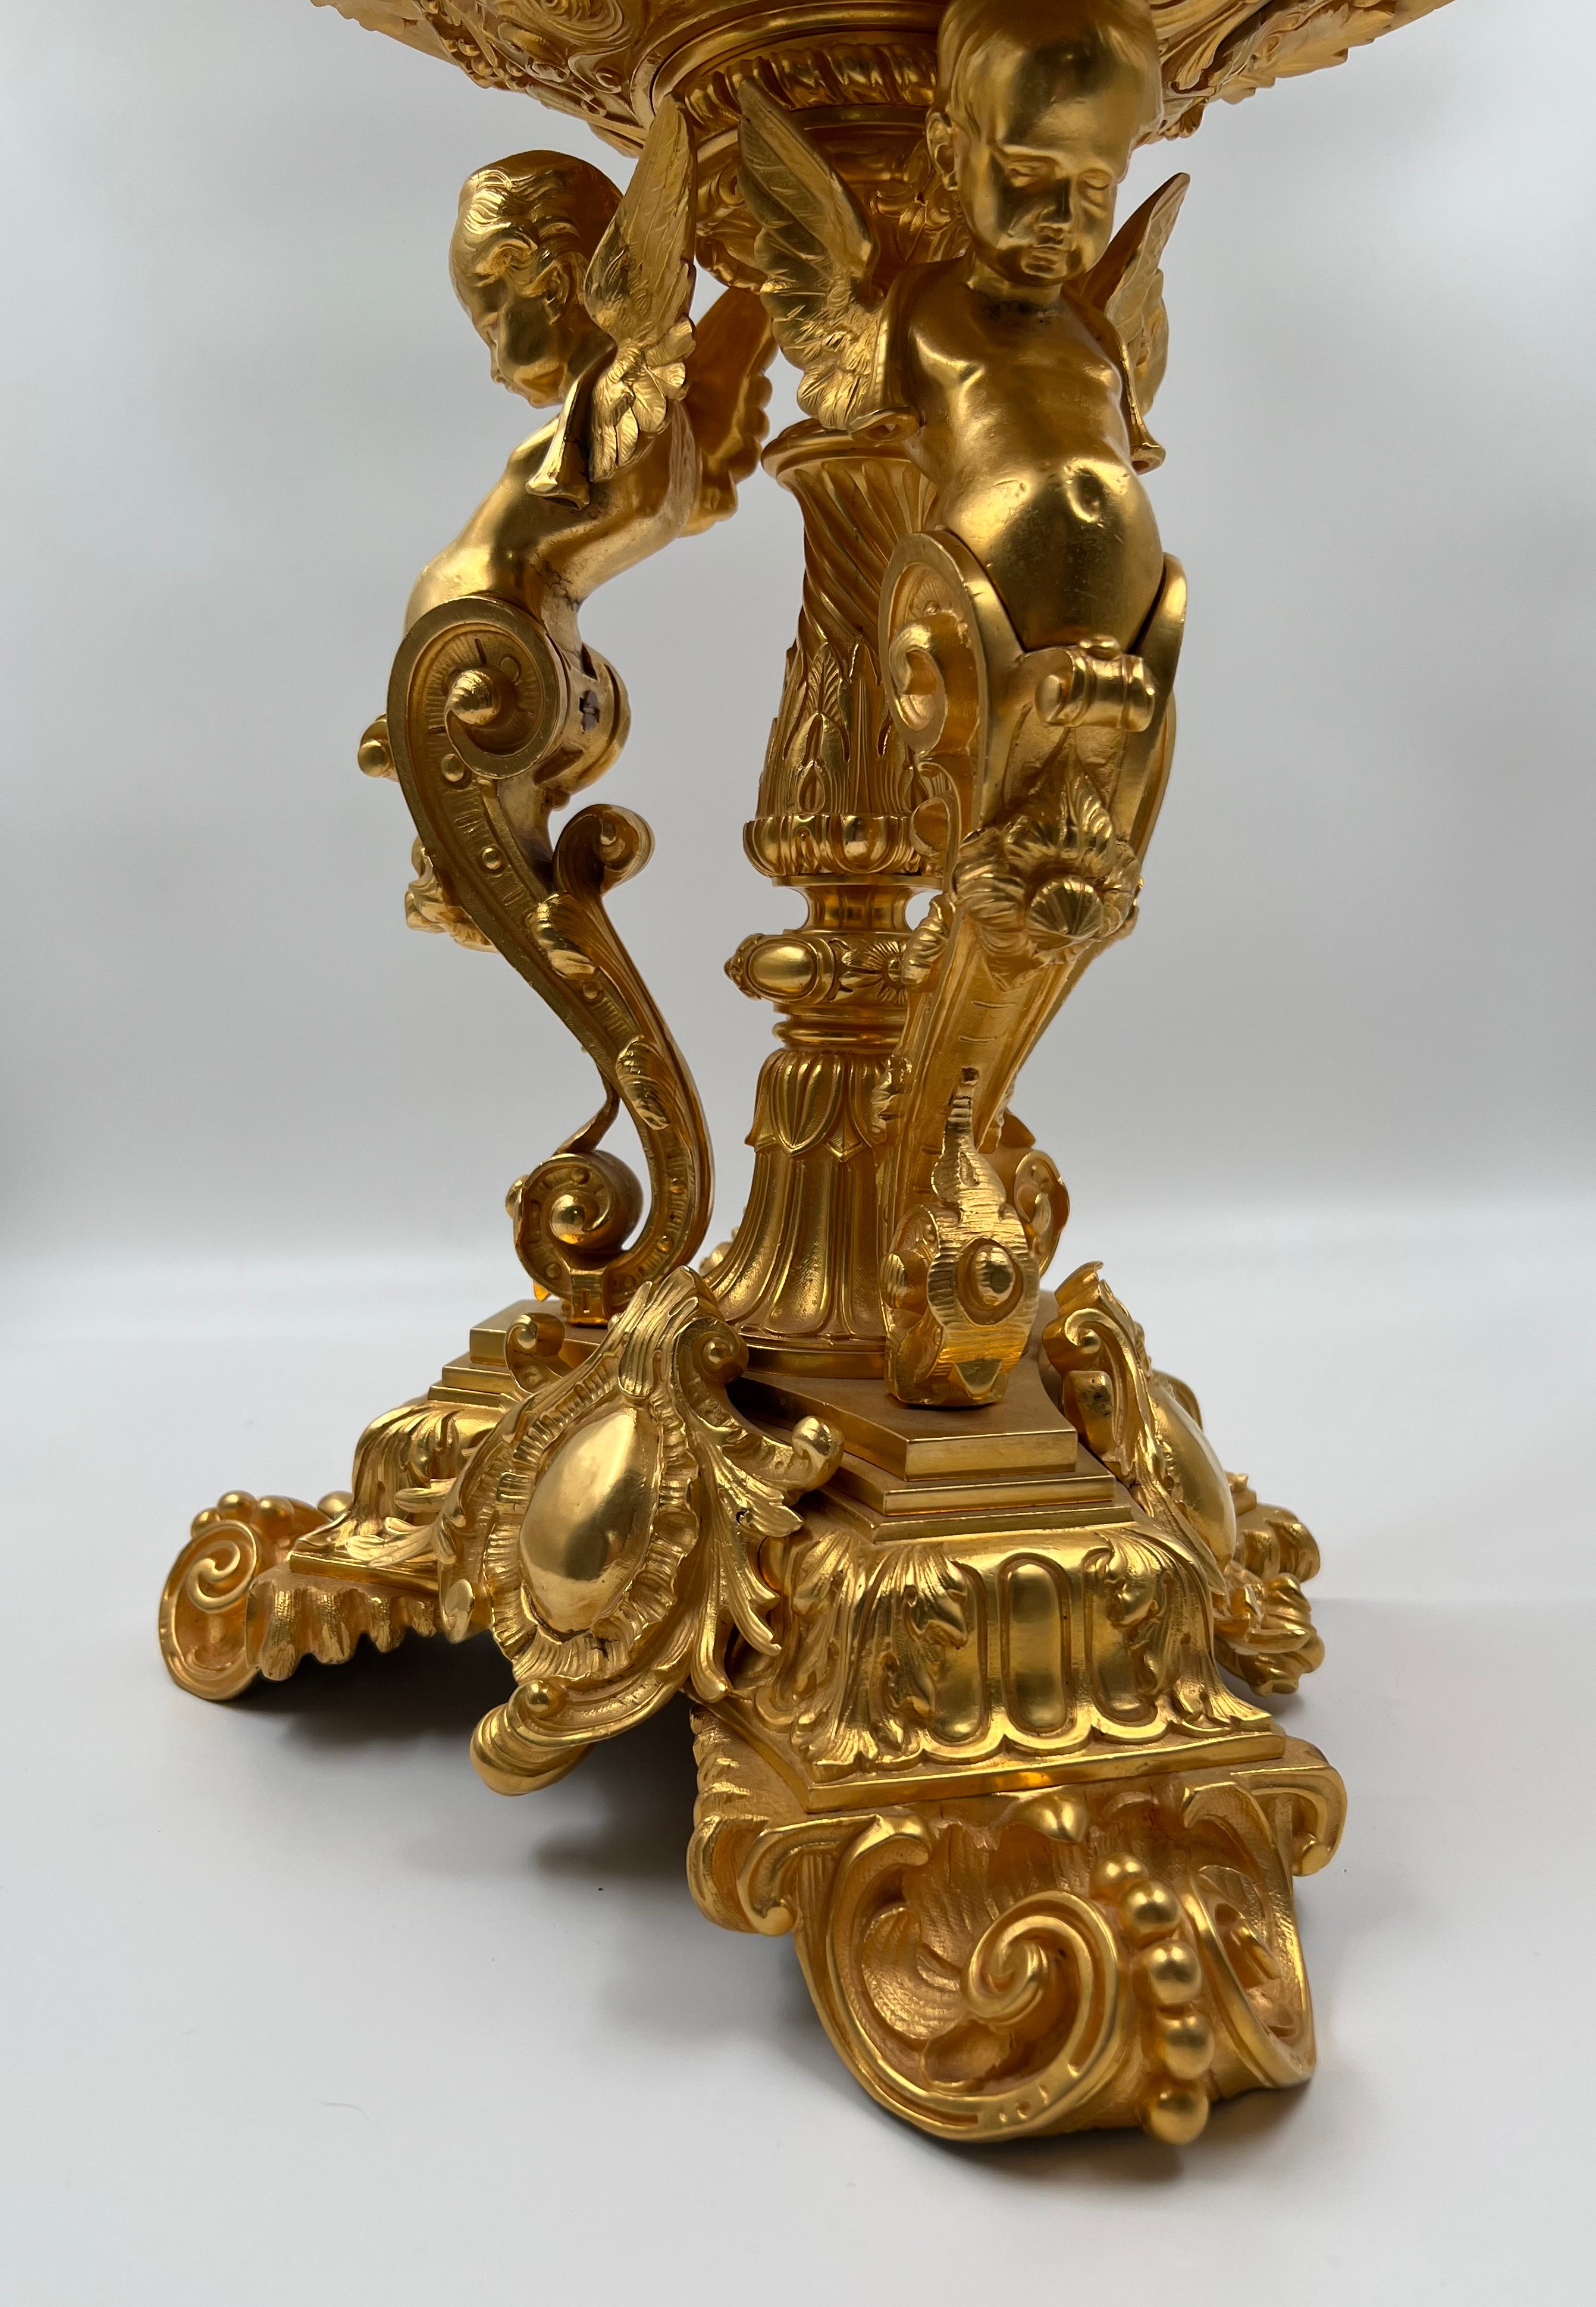 19th-century French gilded bronze planter vase